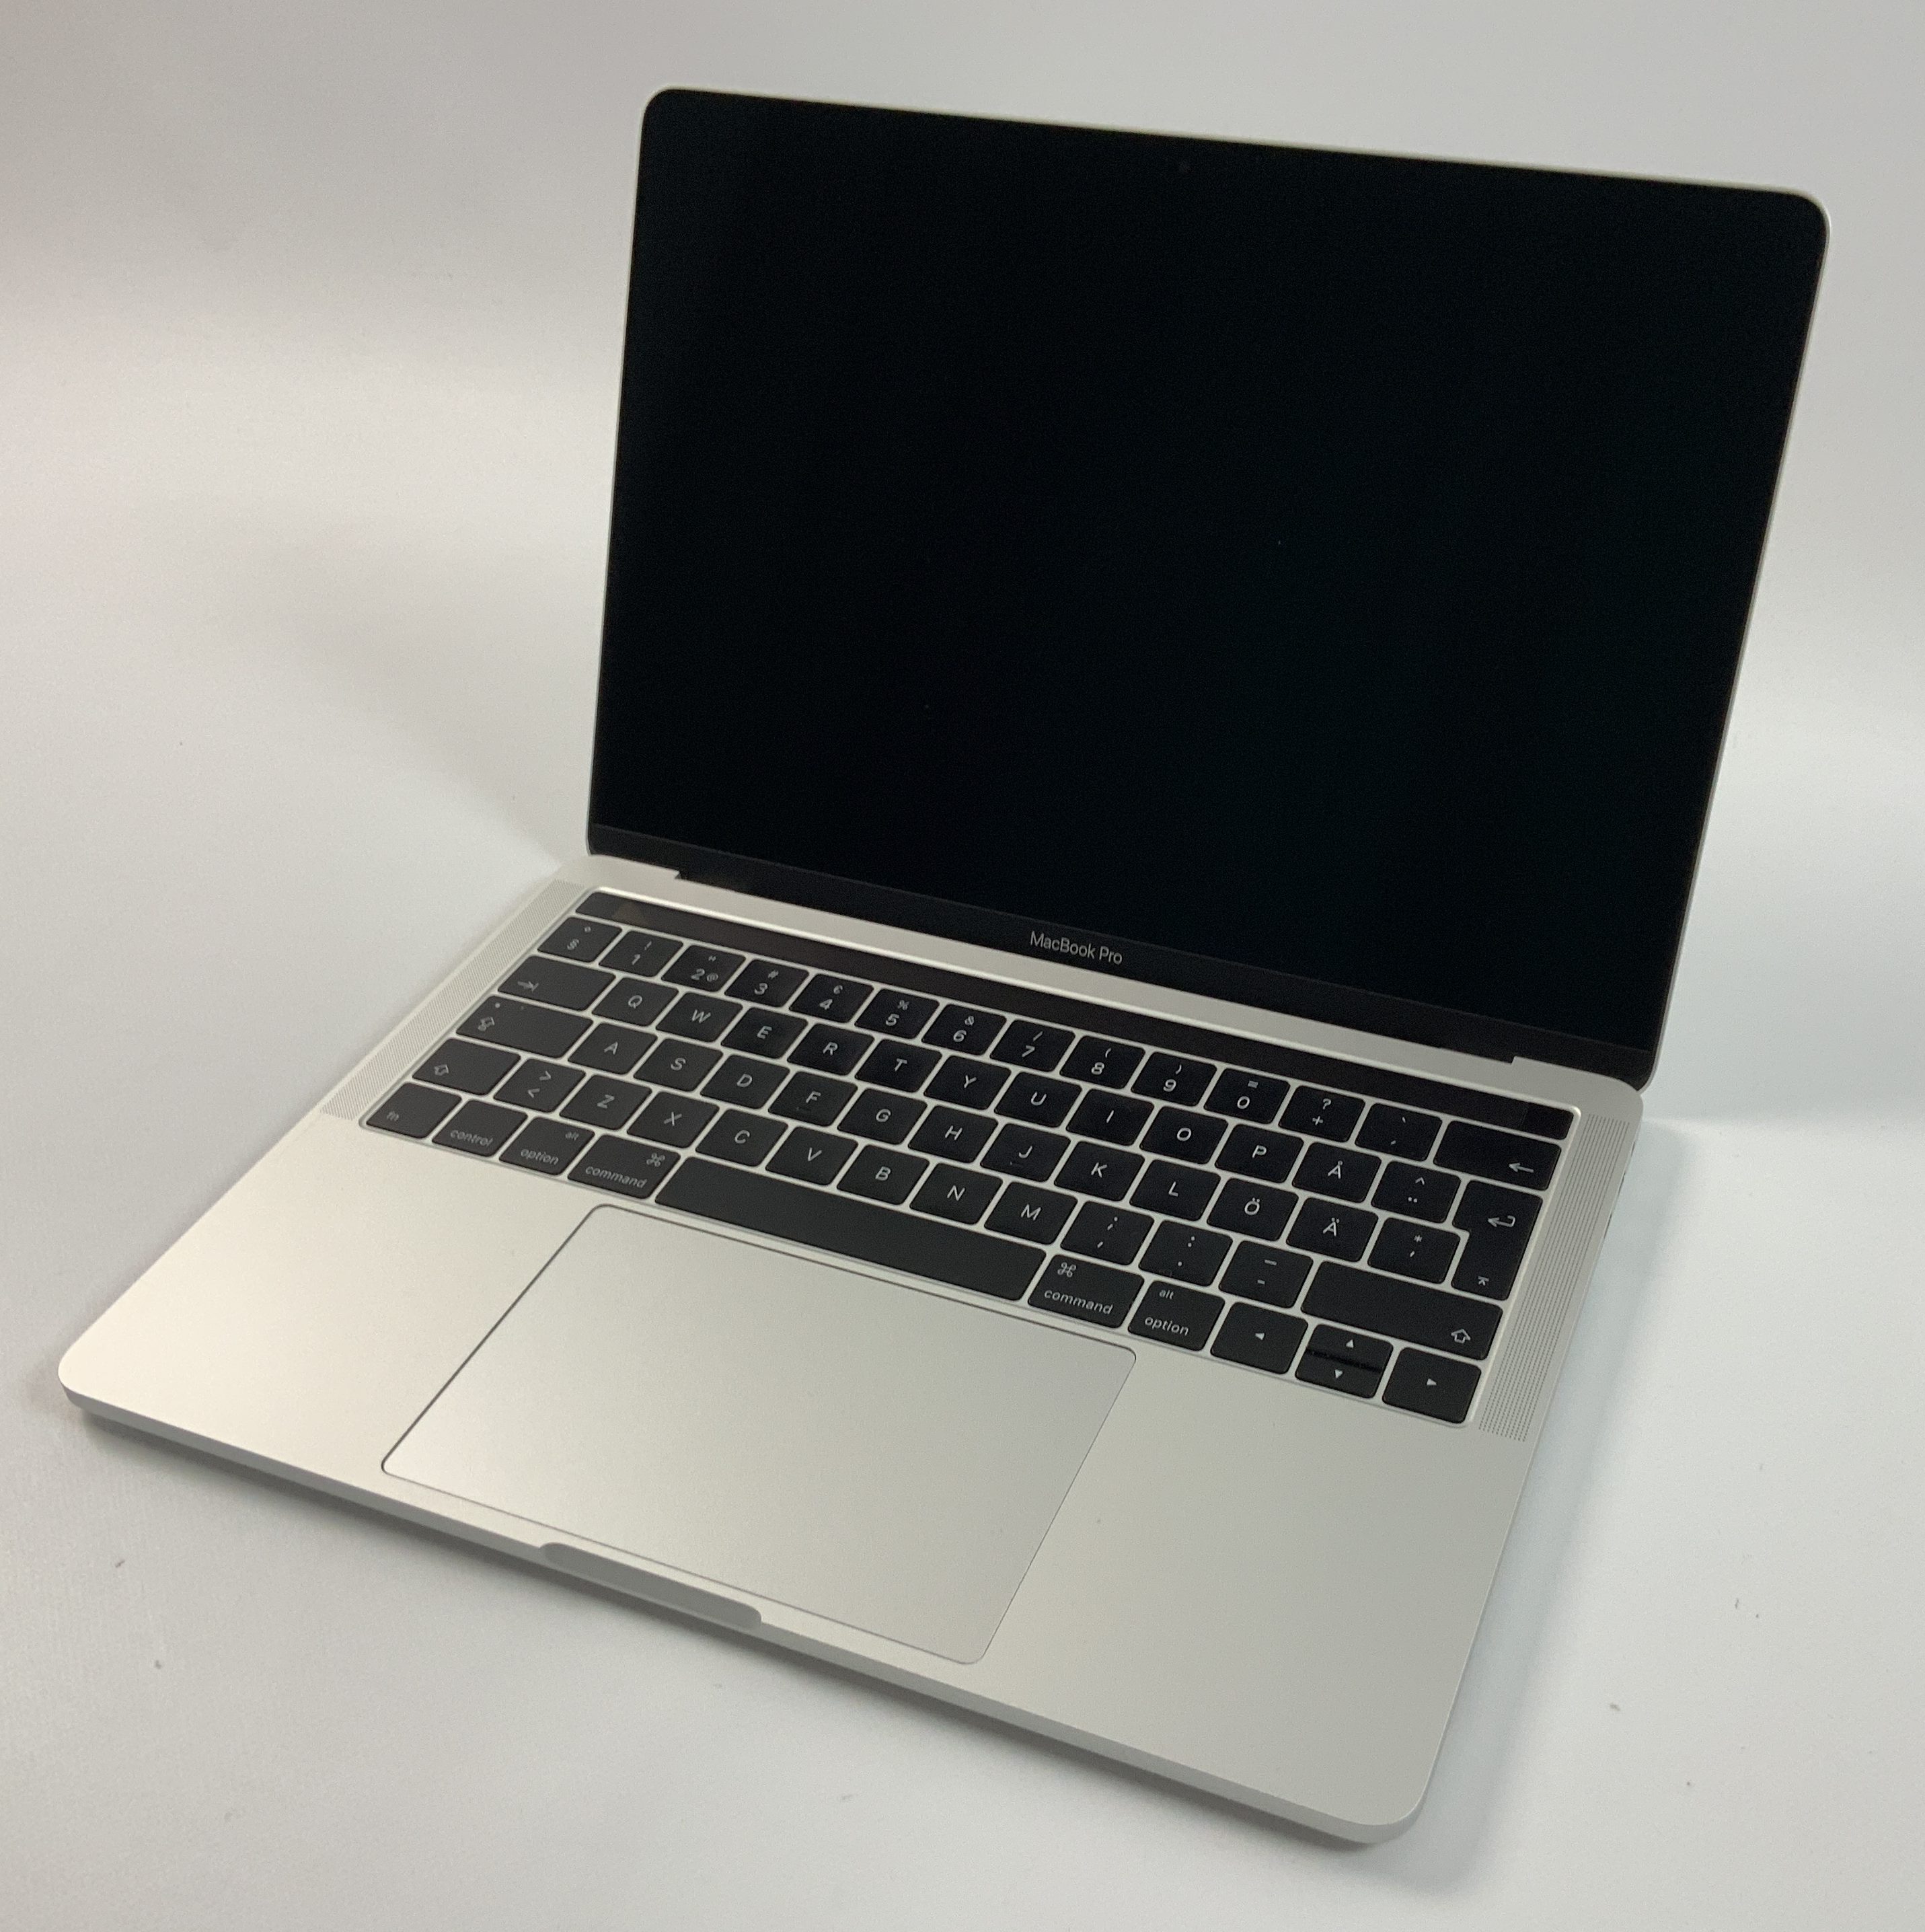 MacBook Pro 13" 4TBT Late 2016 (Intel Core i5 2.9 GHz 16 GB RAM 256 GB SSD), Silver, Intel Core i5 2.9 GHz, 16 GB RAM, 256 GB SSD, image 1